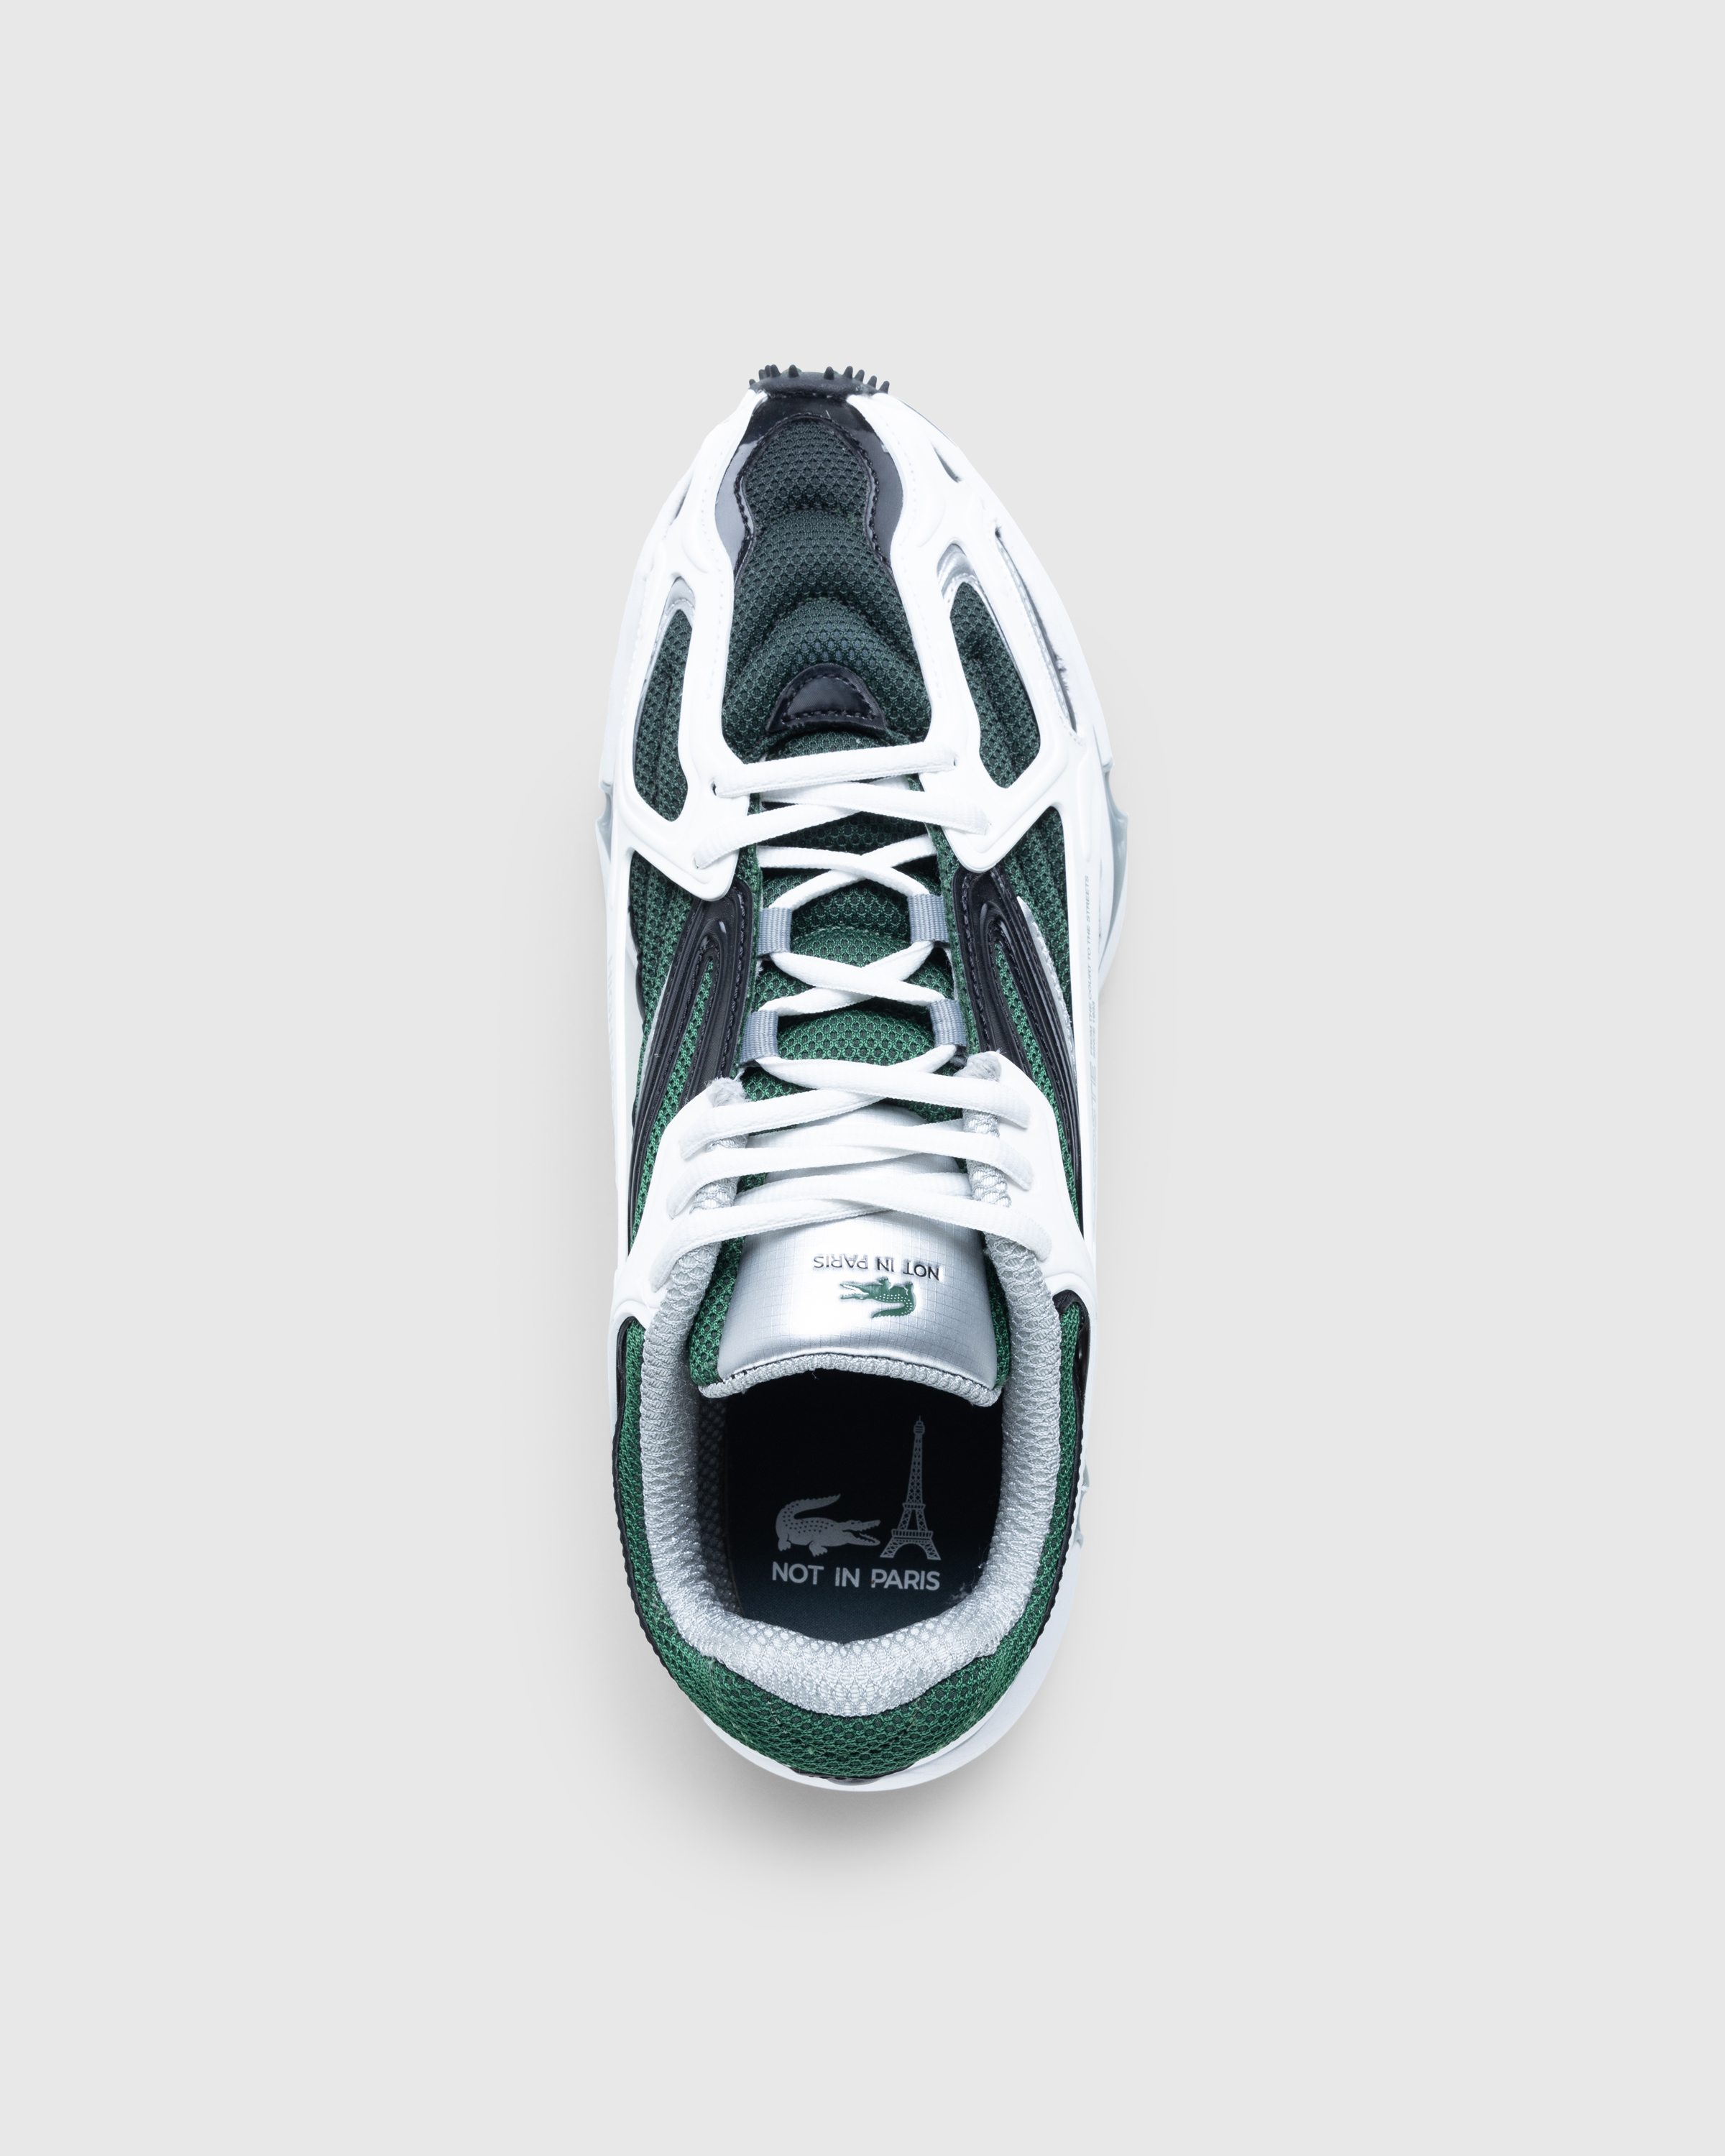 Lacoste x Highsnobiety – L003 2k24 (W) "Not In Paris" Multi - Low Top Sneakers - Green - Image 5